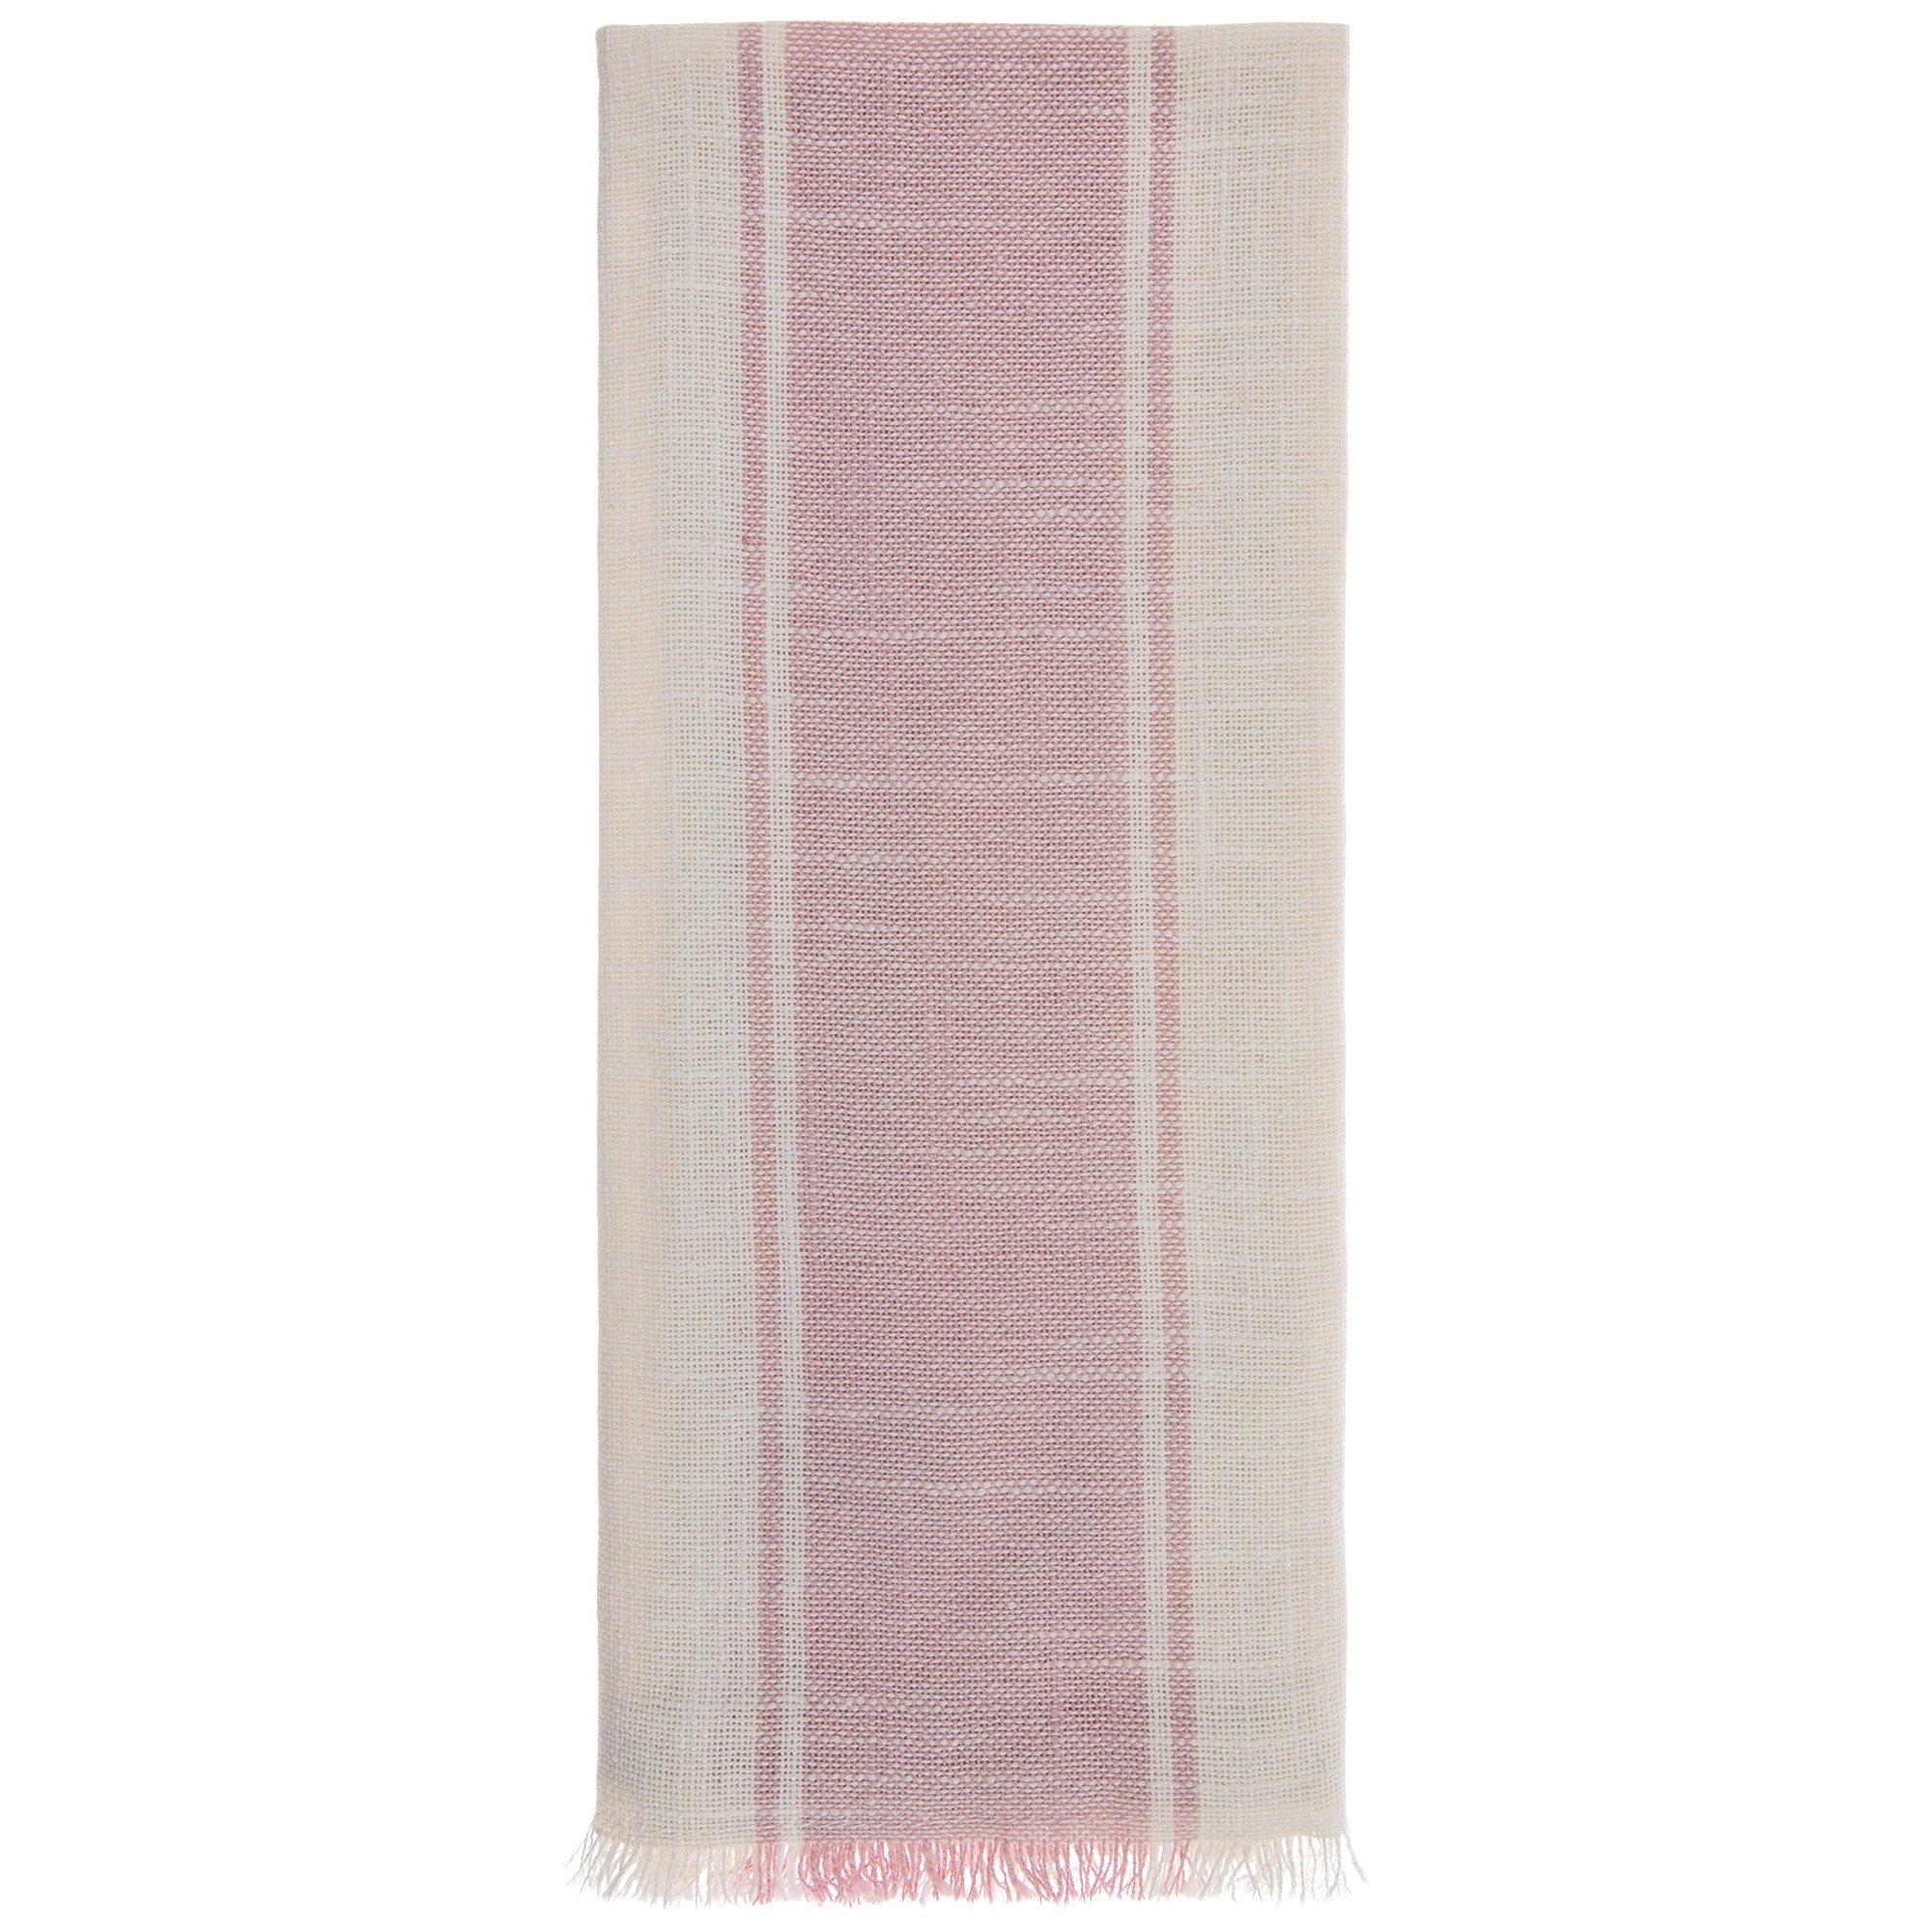 Decorative Kitchen Towels  Marley Ungaro - Tassels Llama Lt Pink